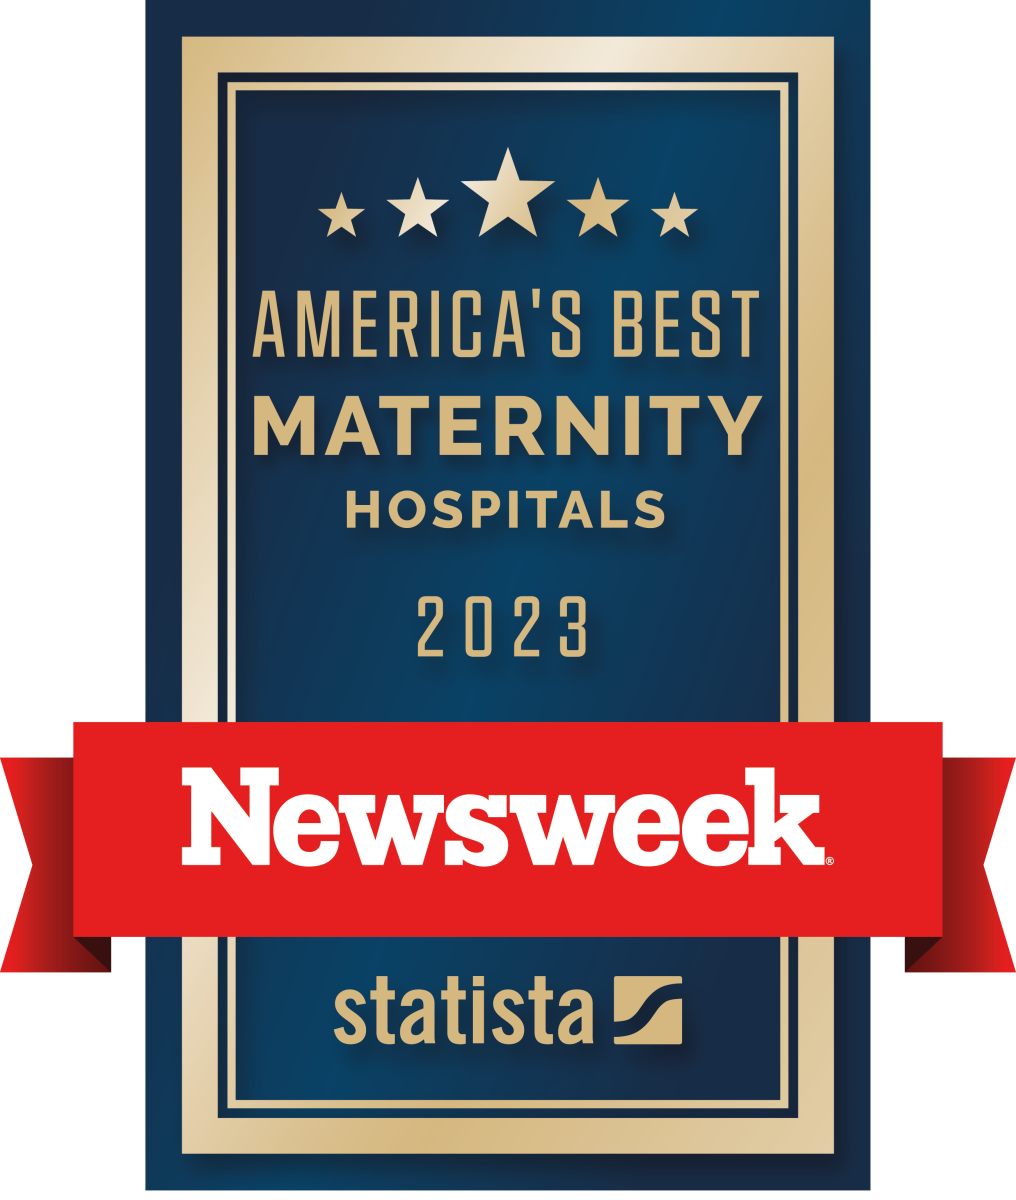 Los mejores hospitales de maternidad de Newsweek